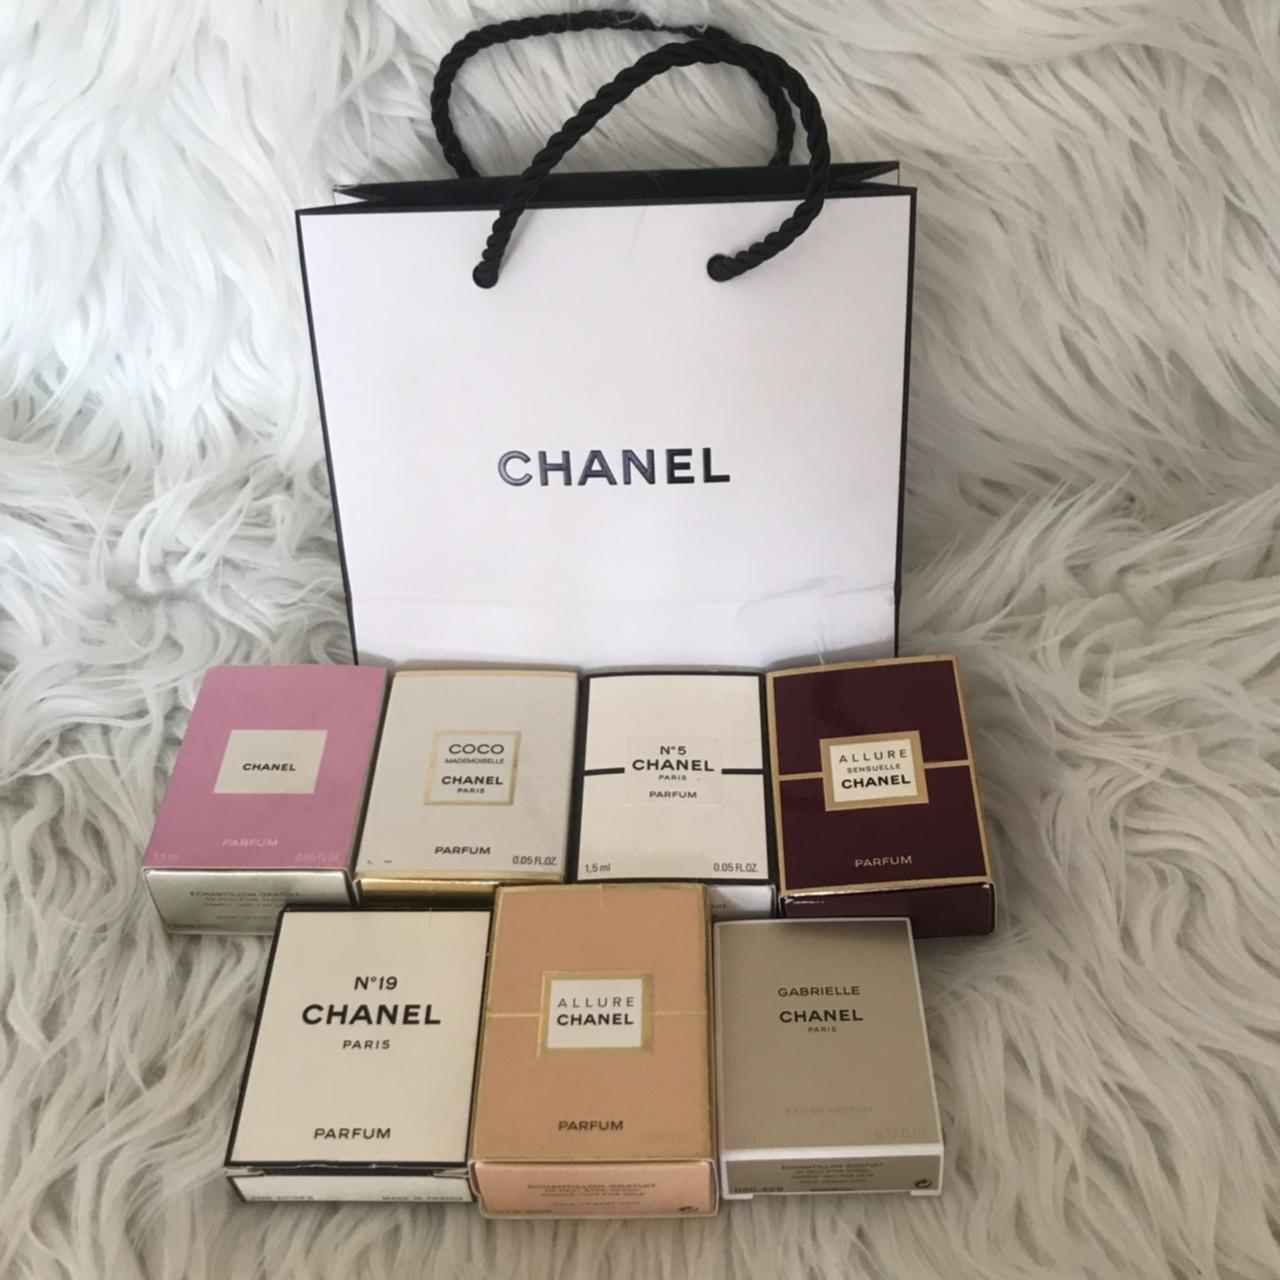 Chanel Mini Perfumes #perfume #fragrance #chanel #❤️ #onlineshoppingpa